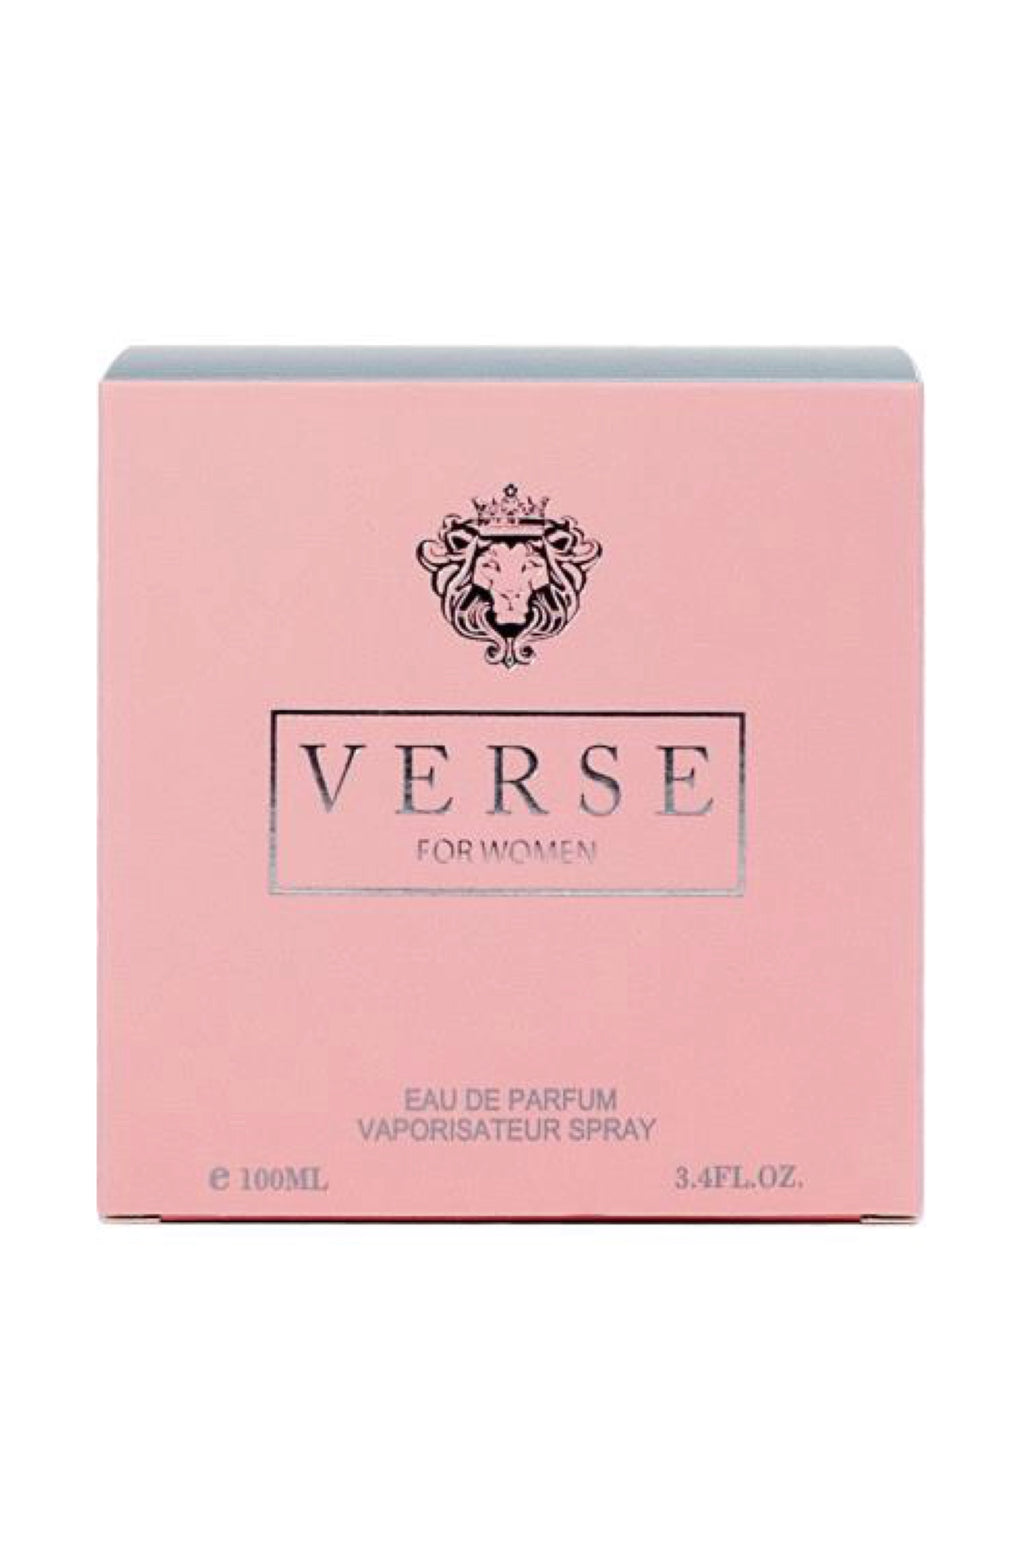 Verse Perfume Box